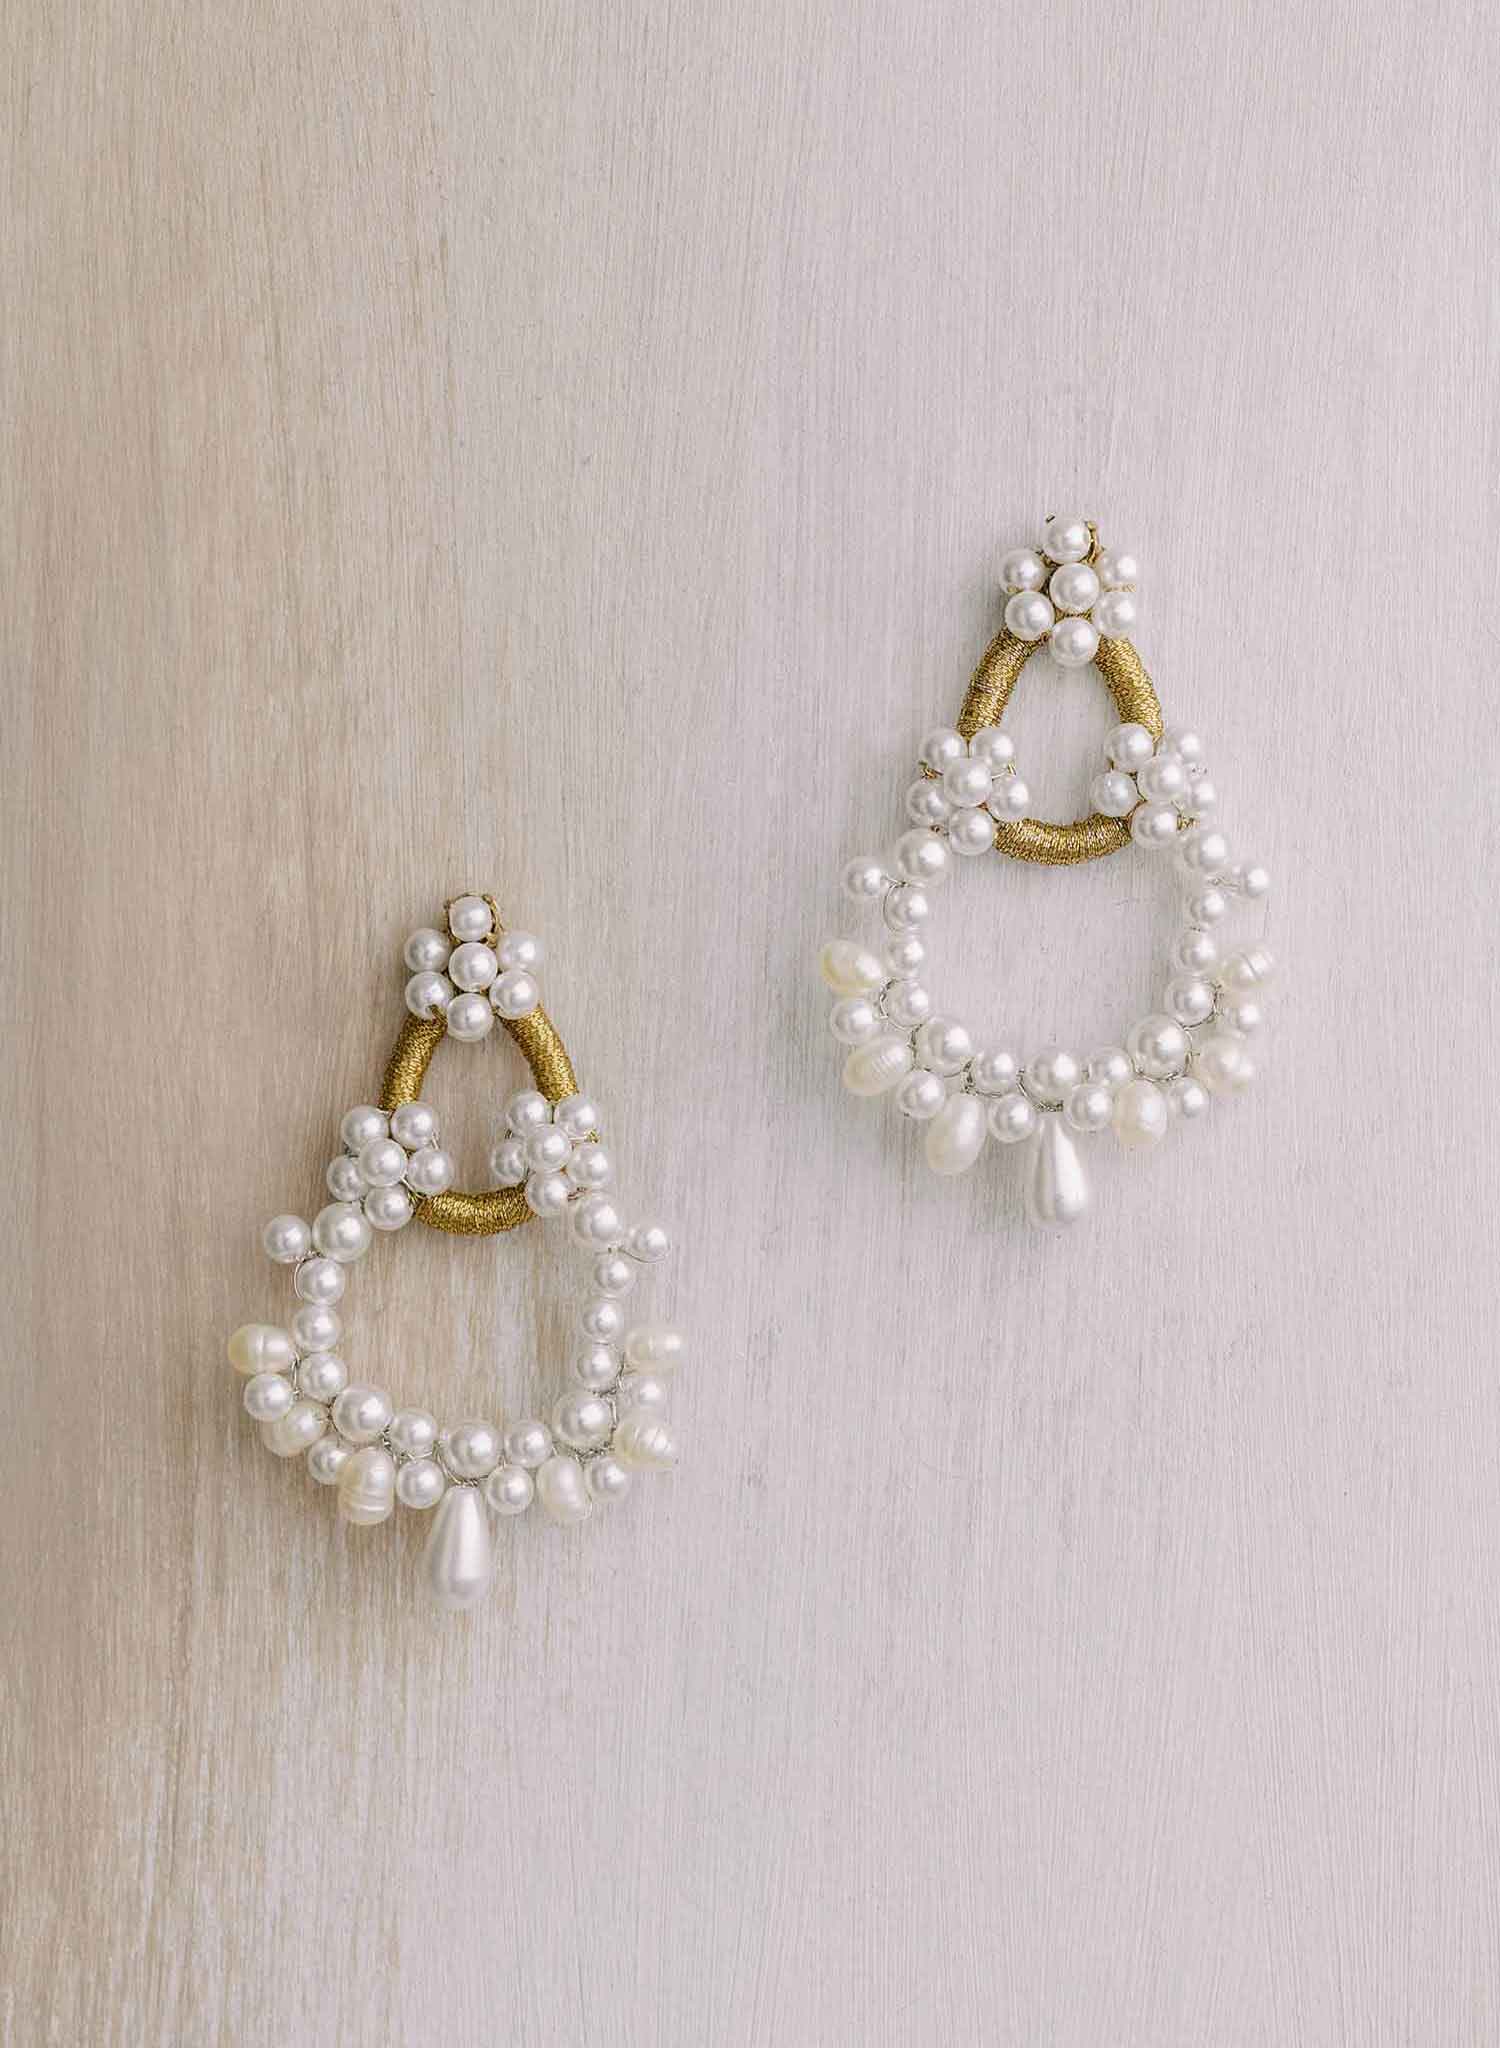 Gold thread wrapped pearl chandelier earrings - Style #2120